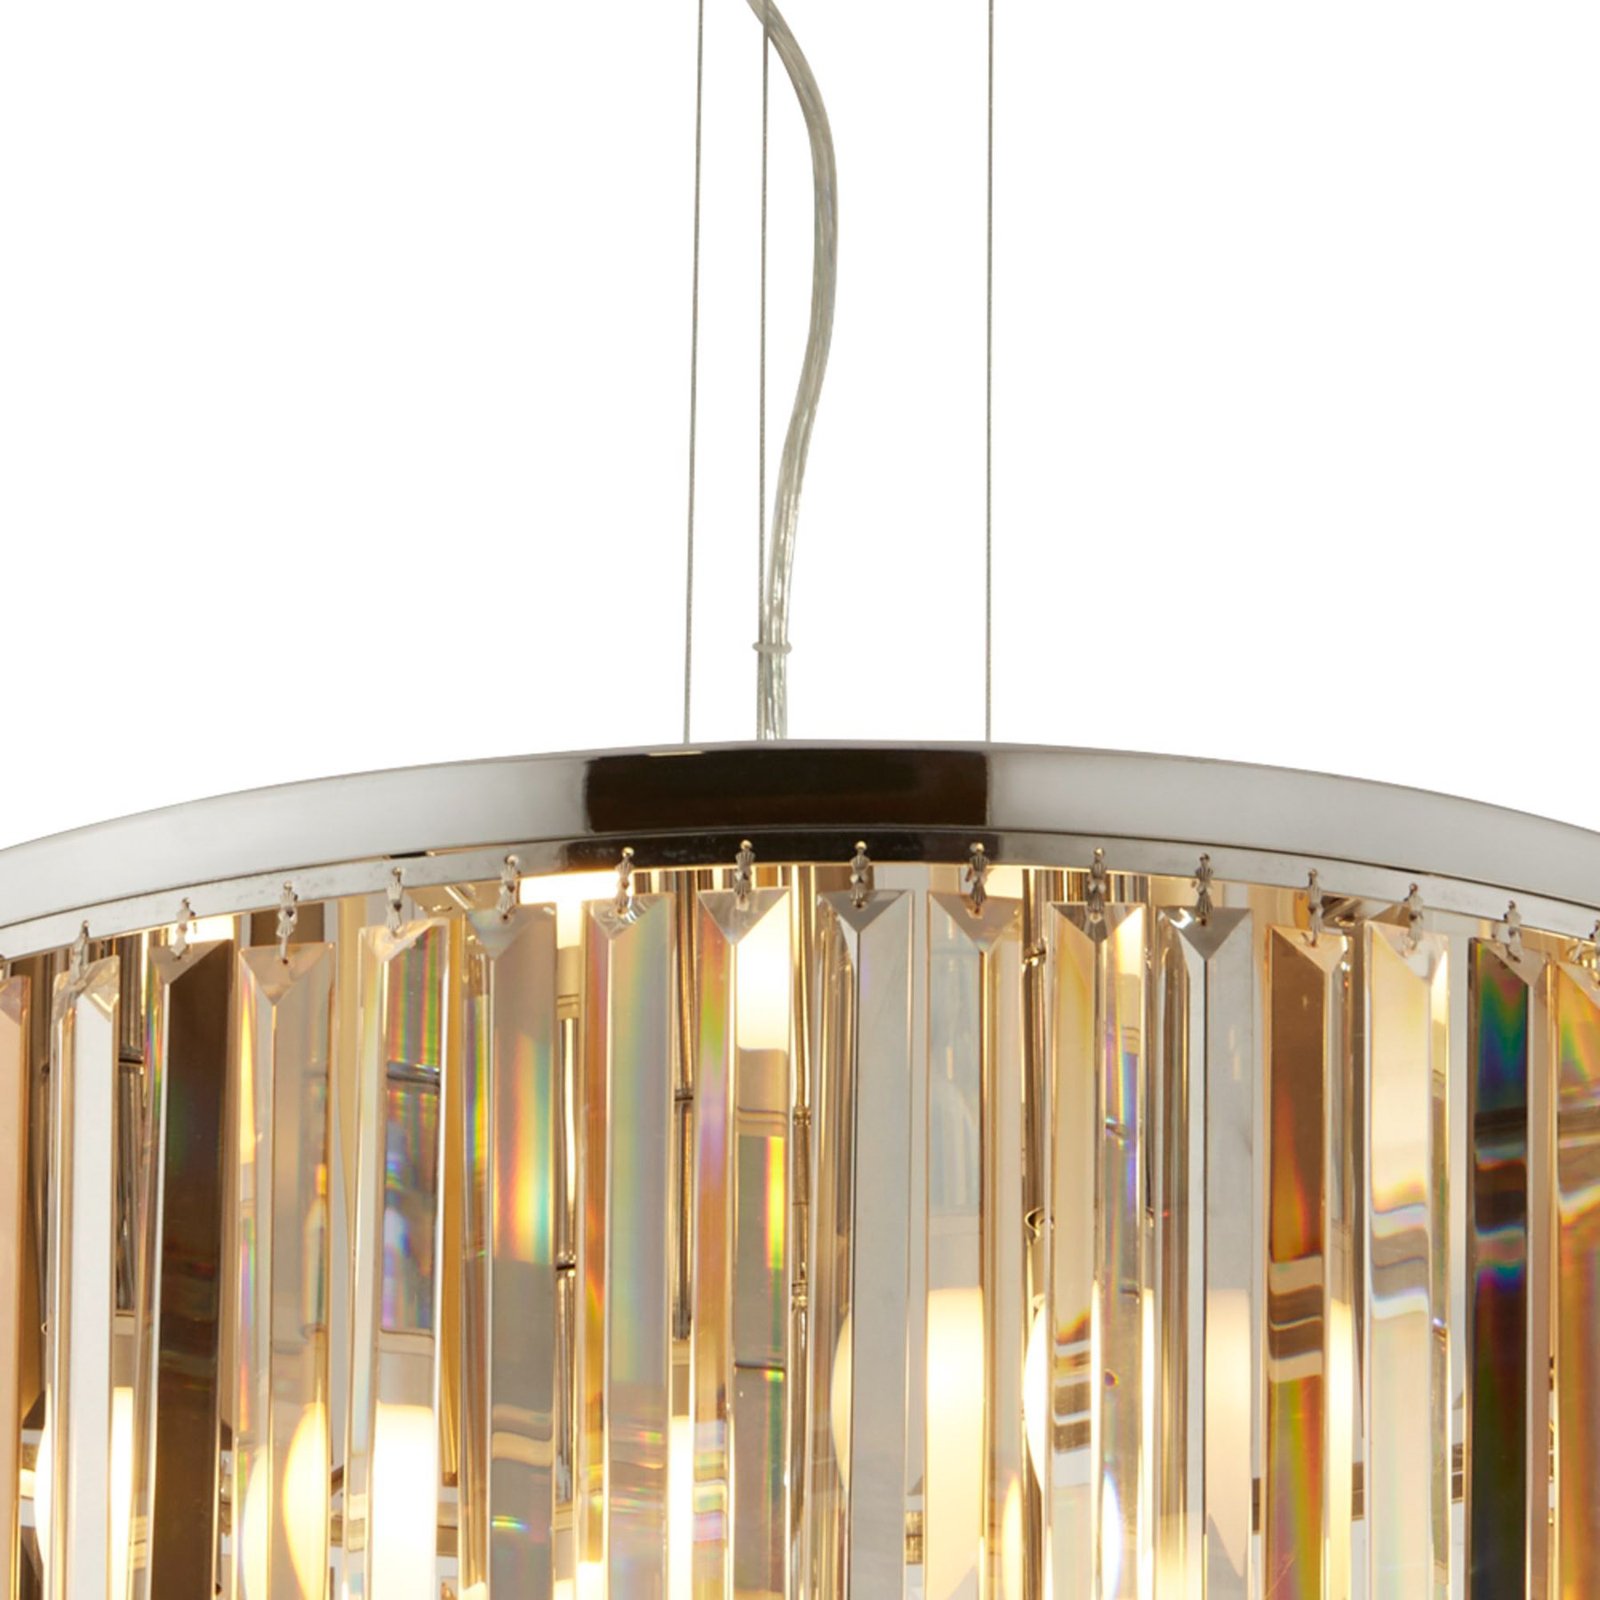 Hanglamp Clarissa met kristallen prisma's, Ø 60 cm